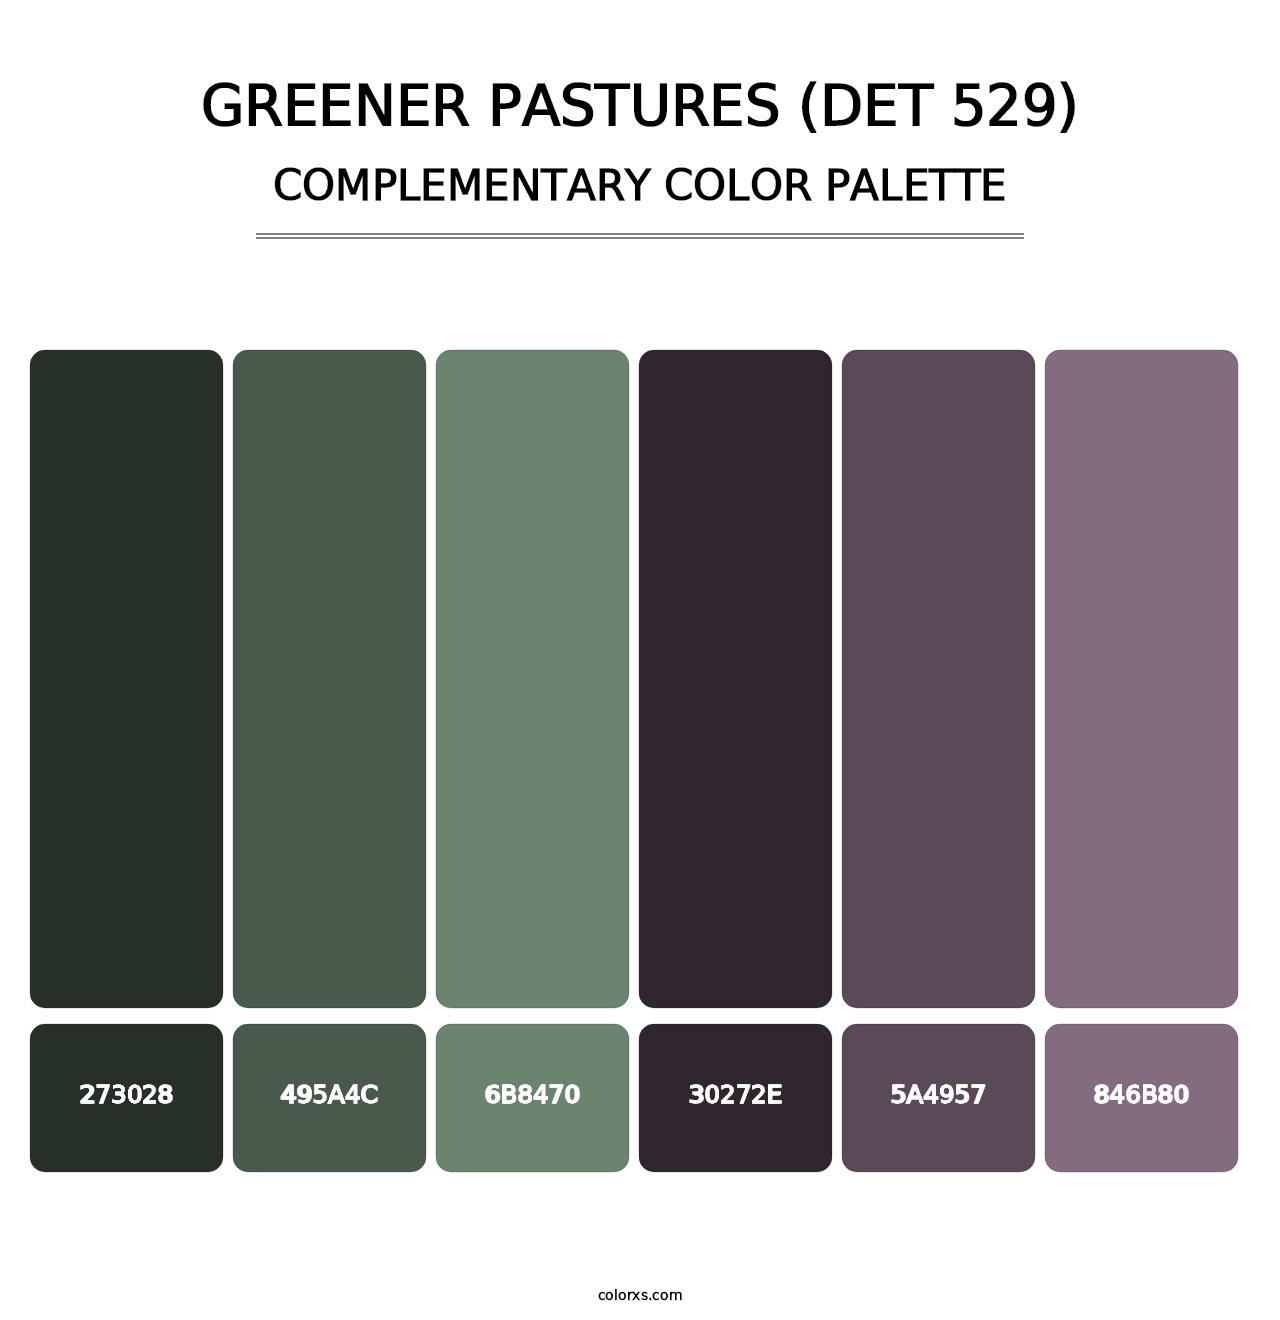 Greener Pastures (DET 529) - Complementary Color Palette